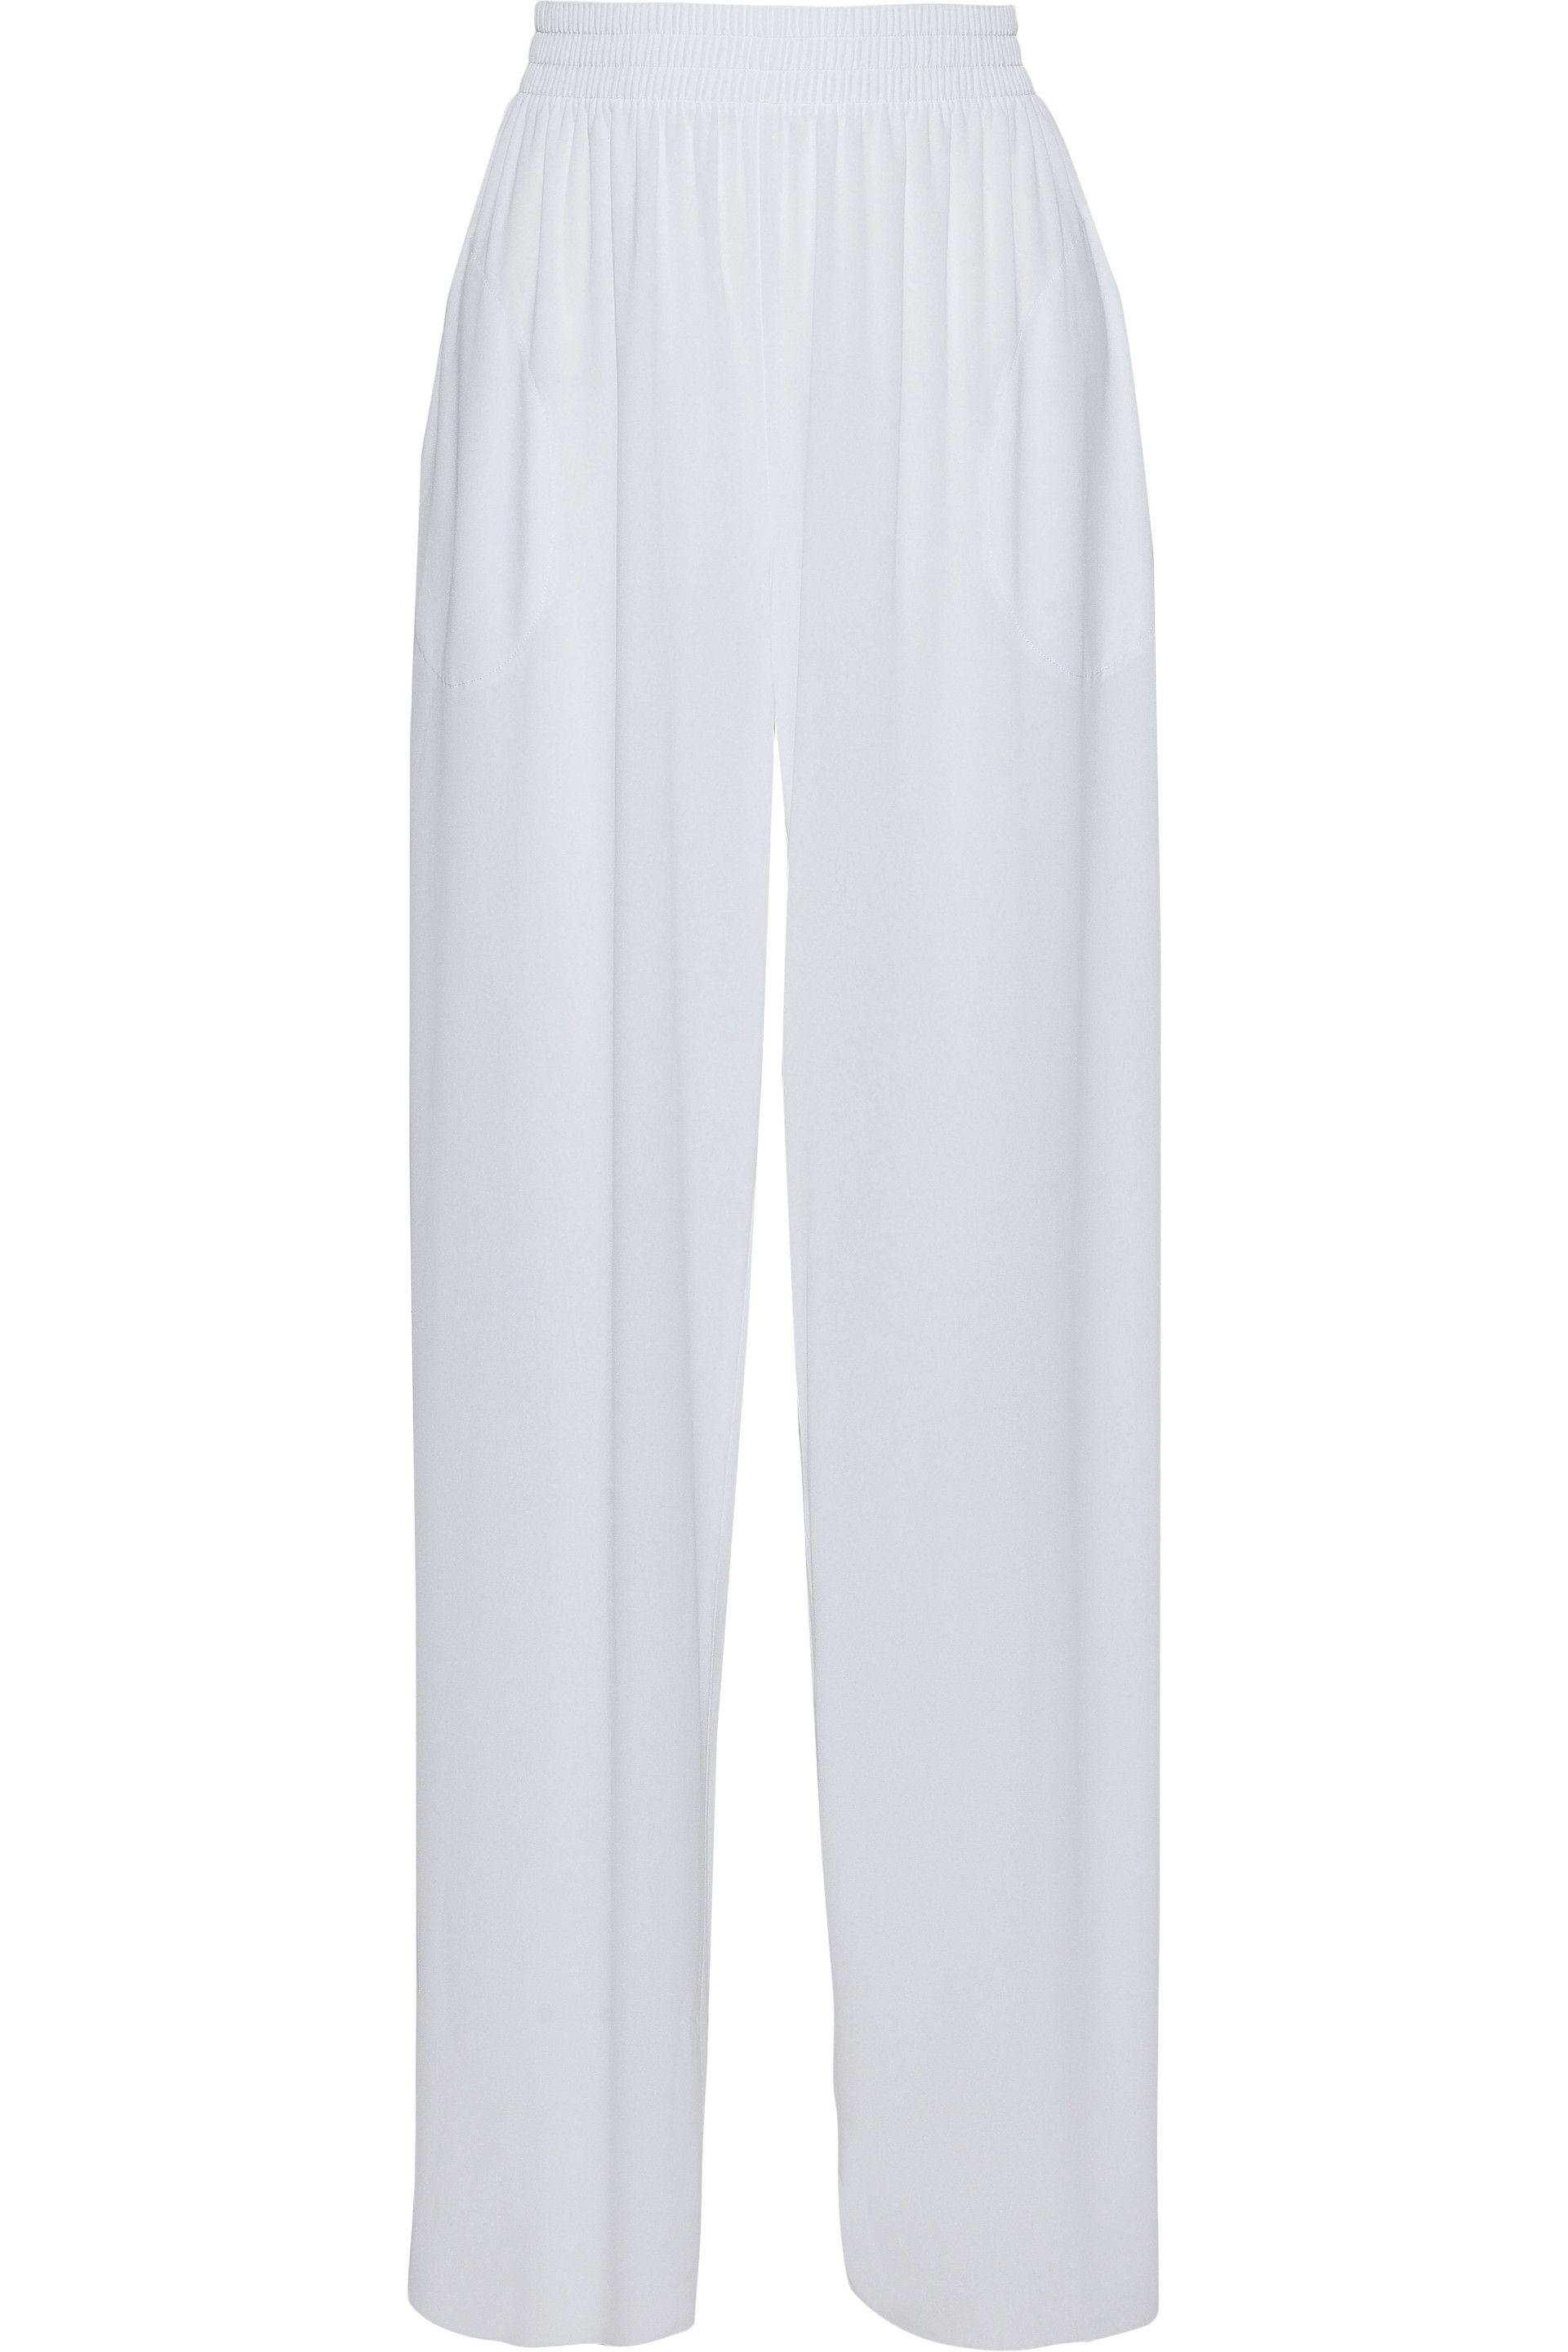 Norma Kamali Synthetic Striped Jersey Wide-leg Pants White - Lyst